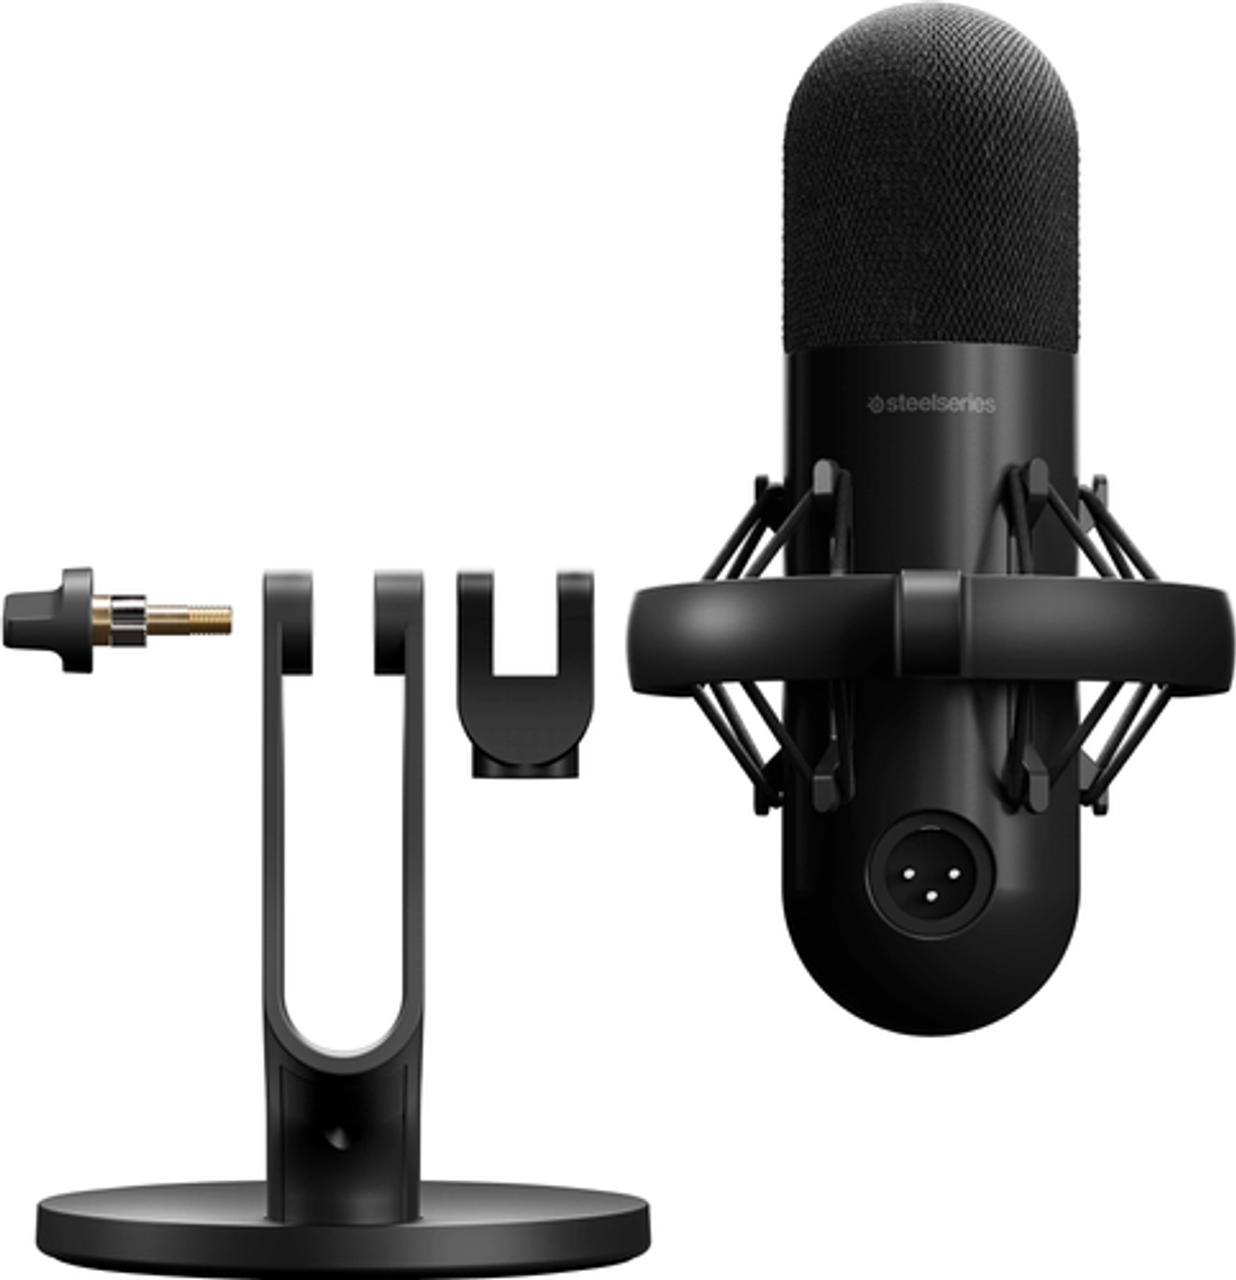 SteelSeries Alias Pro XLR Microphone